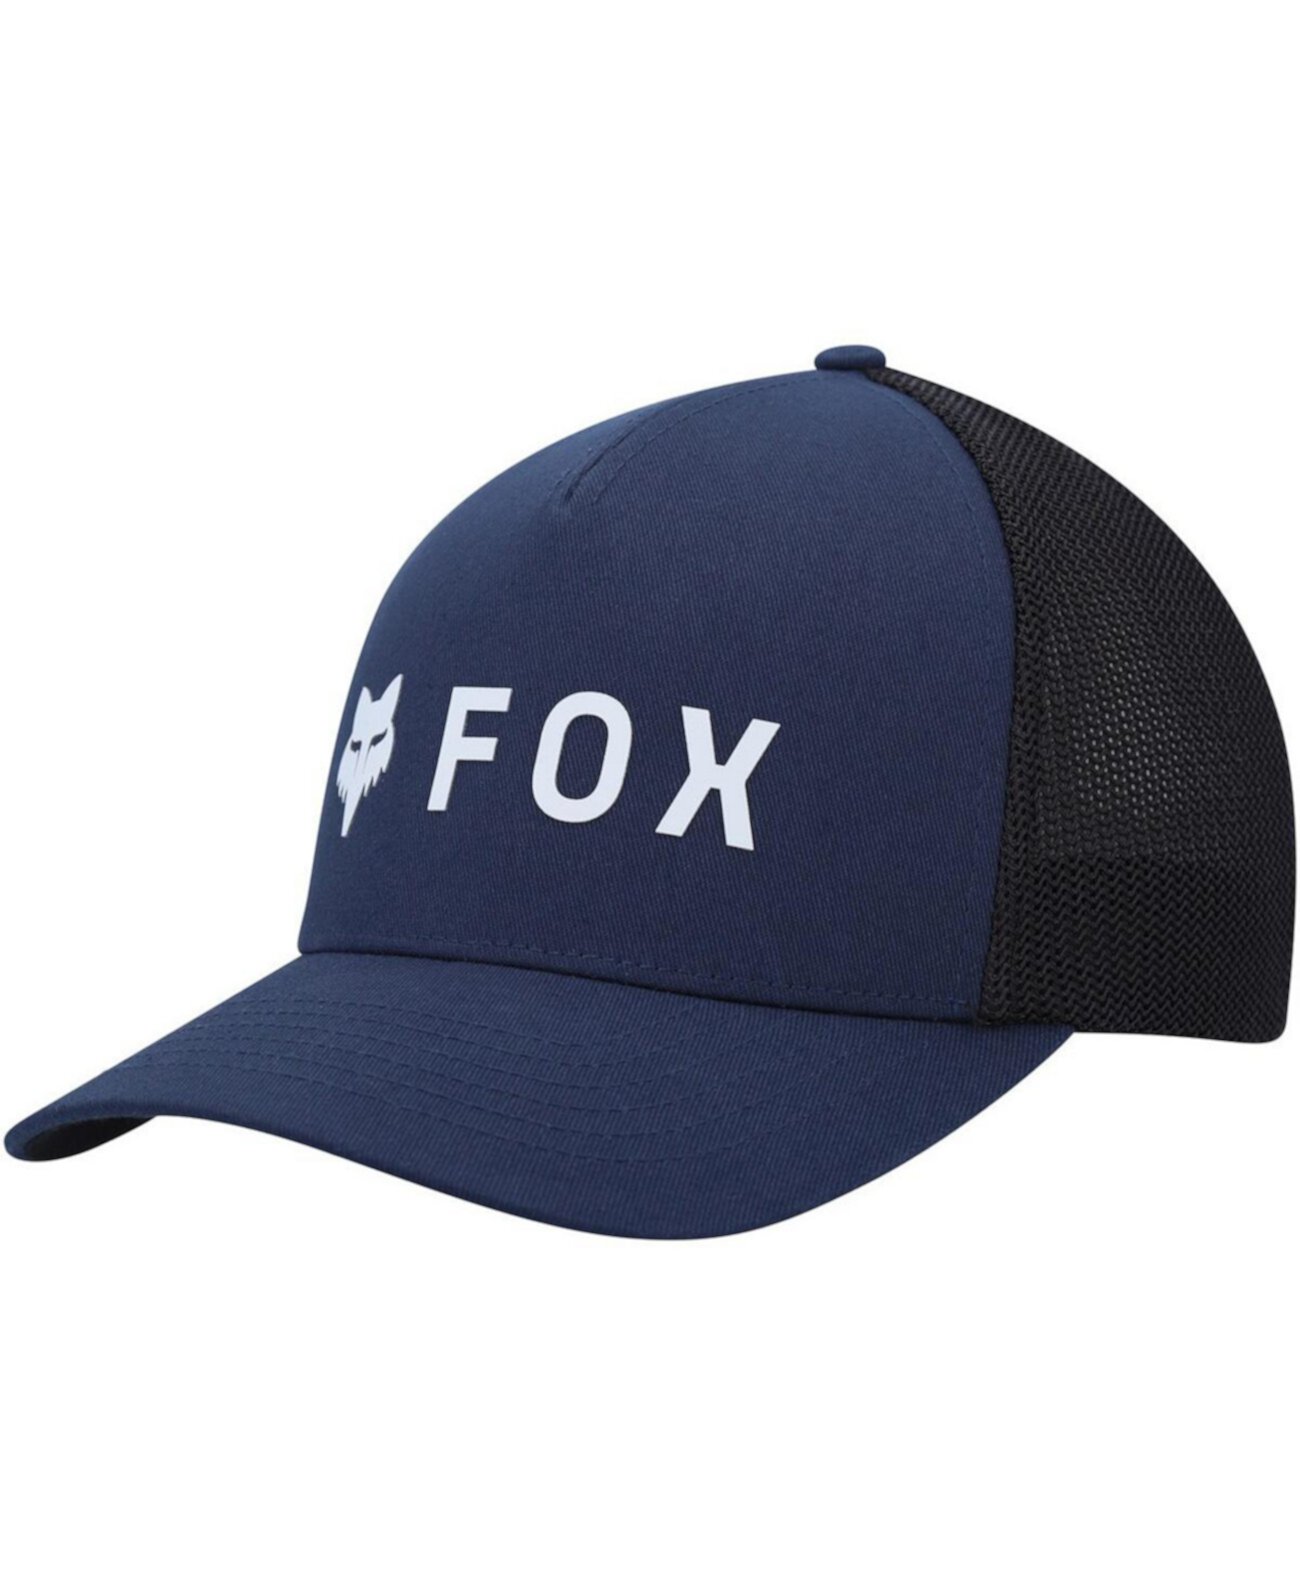 Мужская темно-синяя шляпа Absolute Mesh Flex Fox